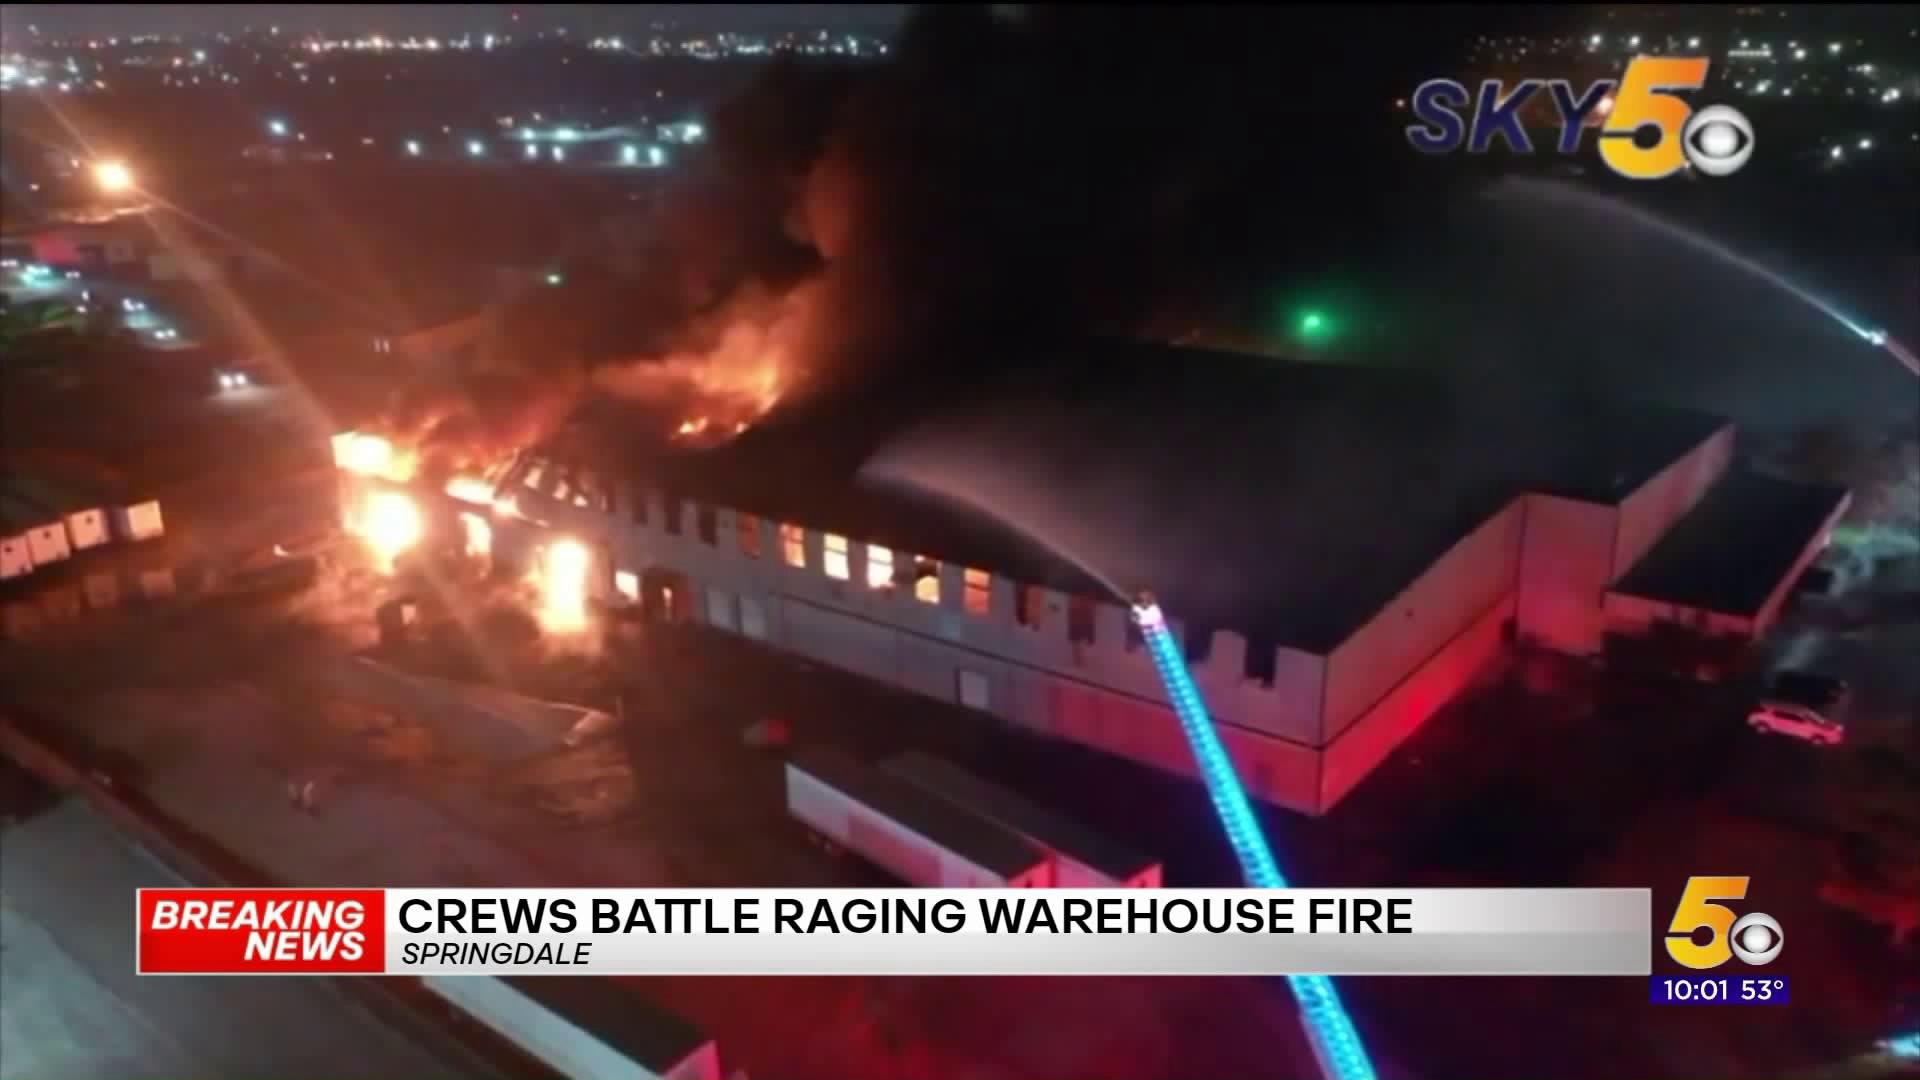 Crews Battle Warehouse Fire In Springdale, 3 Firefighters Taken To Hospital